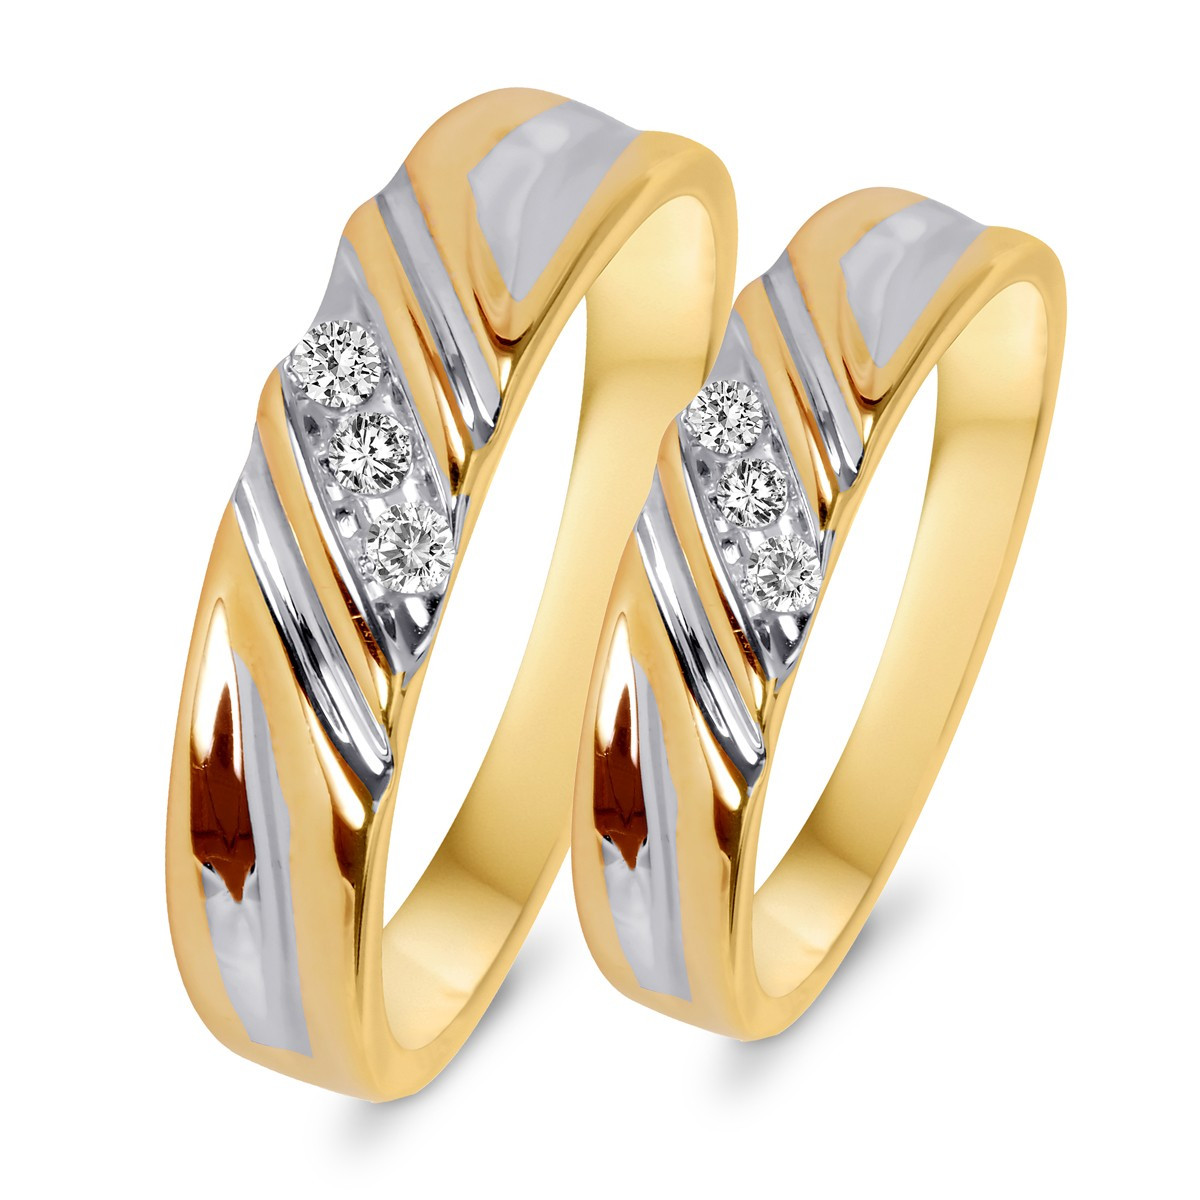 Yellow Diamond Wedding Rings
 1 10 CT T W Diamond His And Hers Wedding Rings 10K